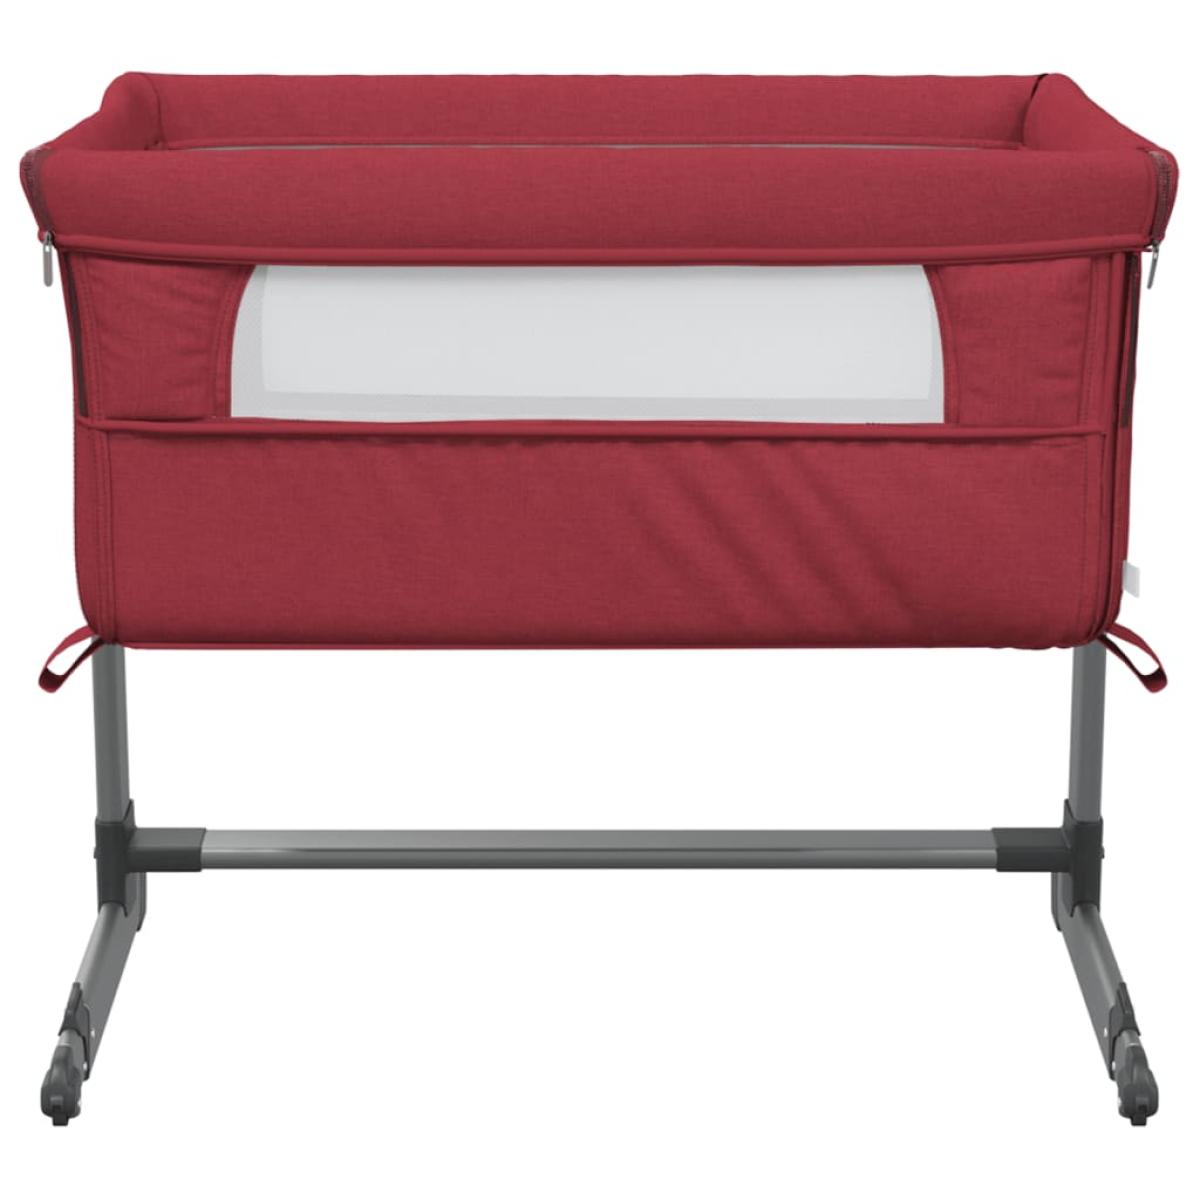 Cuna con colchón tela de lino rojo